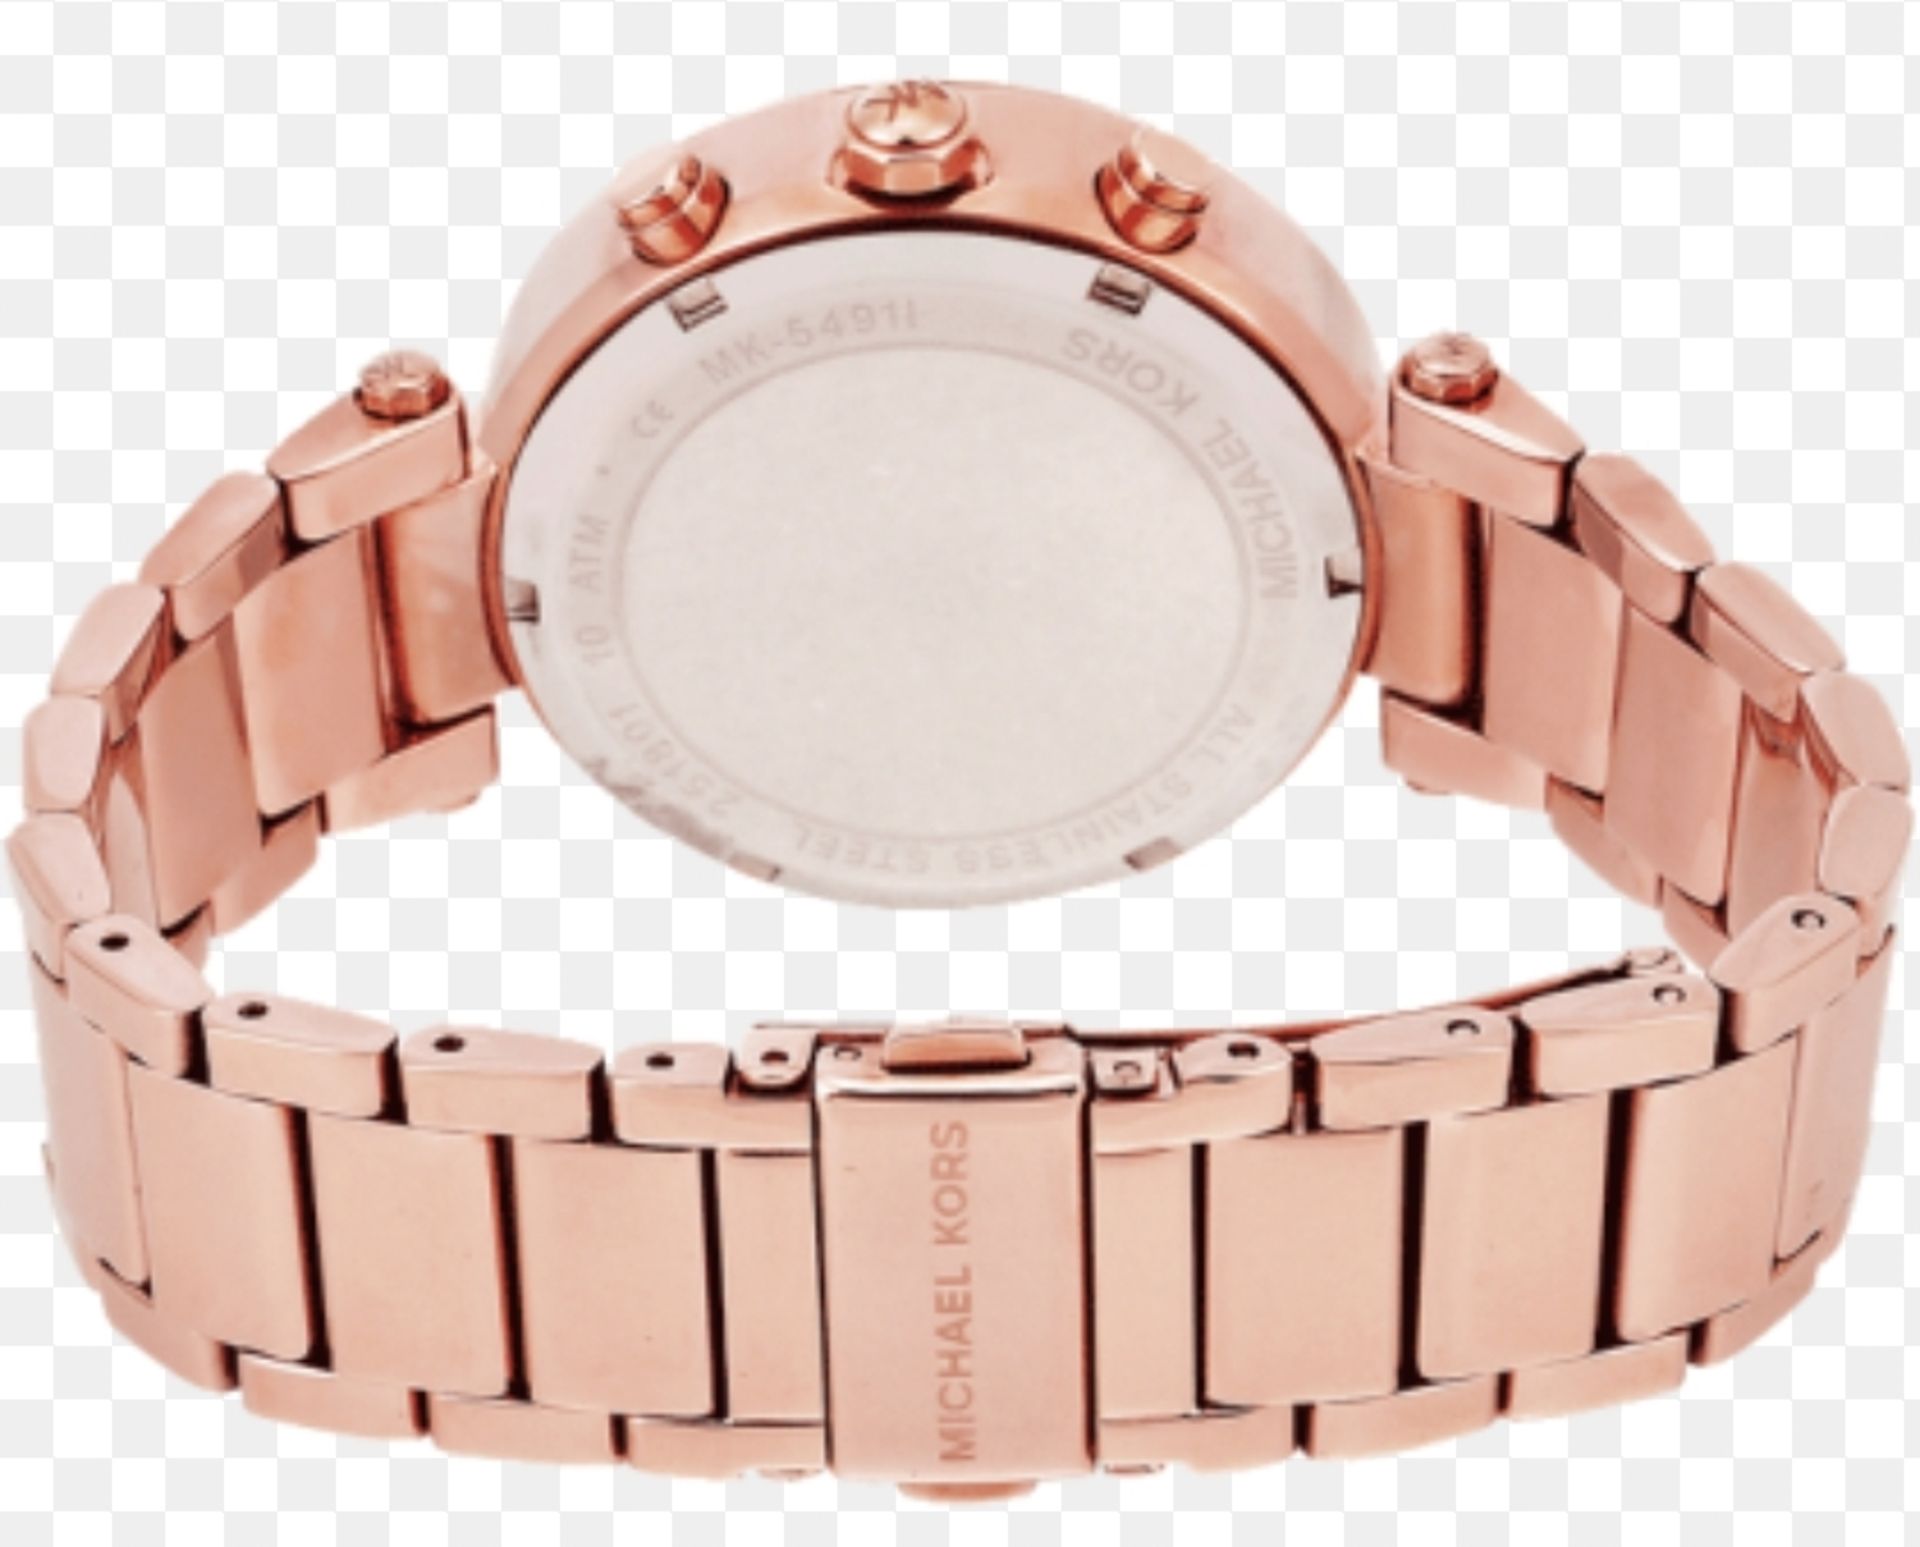 Ladies Michael Kors Parker Chronograph Watch MK5491 - Image 6 of 8